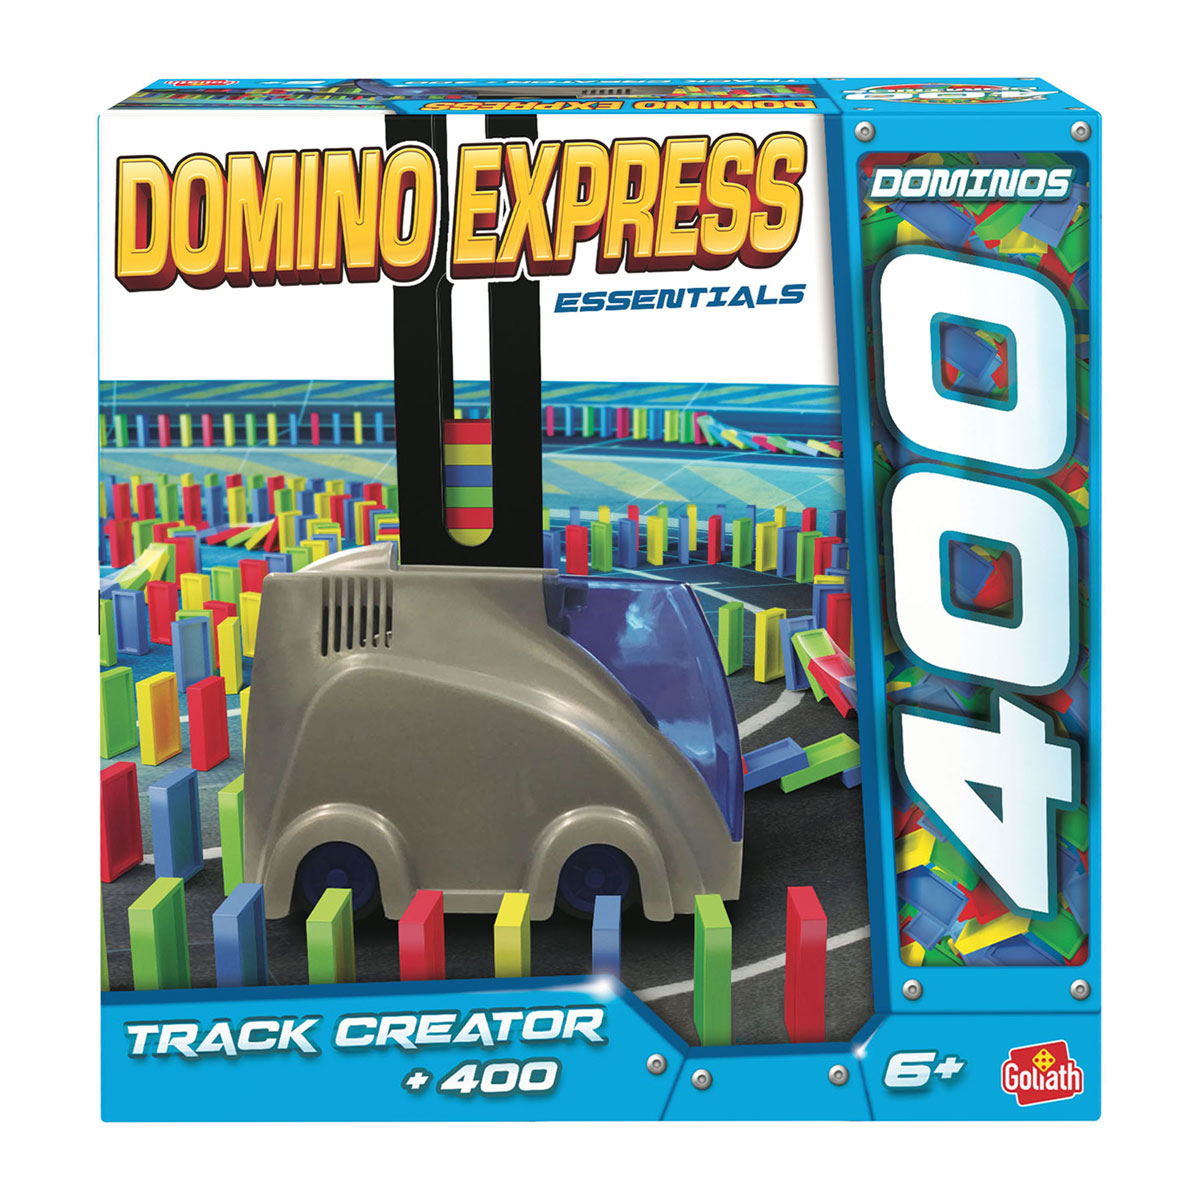 Domino Express Track Creator, 400 Bricks